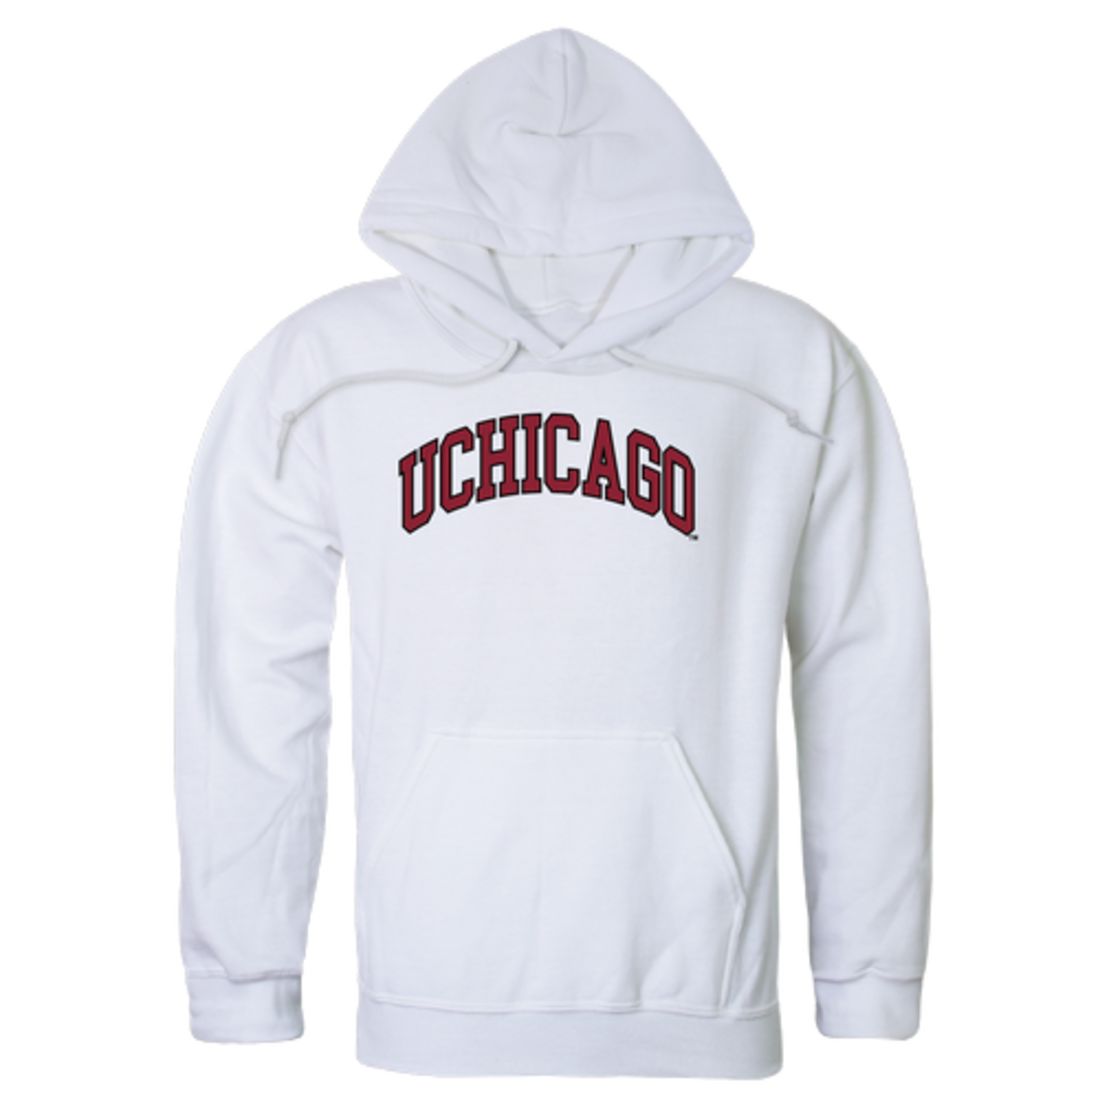 University-of-Chicago-Maroons-Campus-Fleece-Hoodie-Sweatshirts